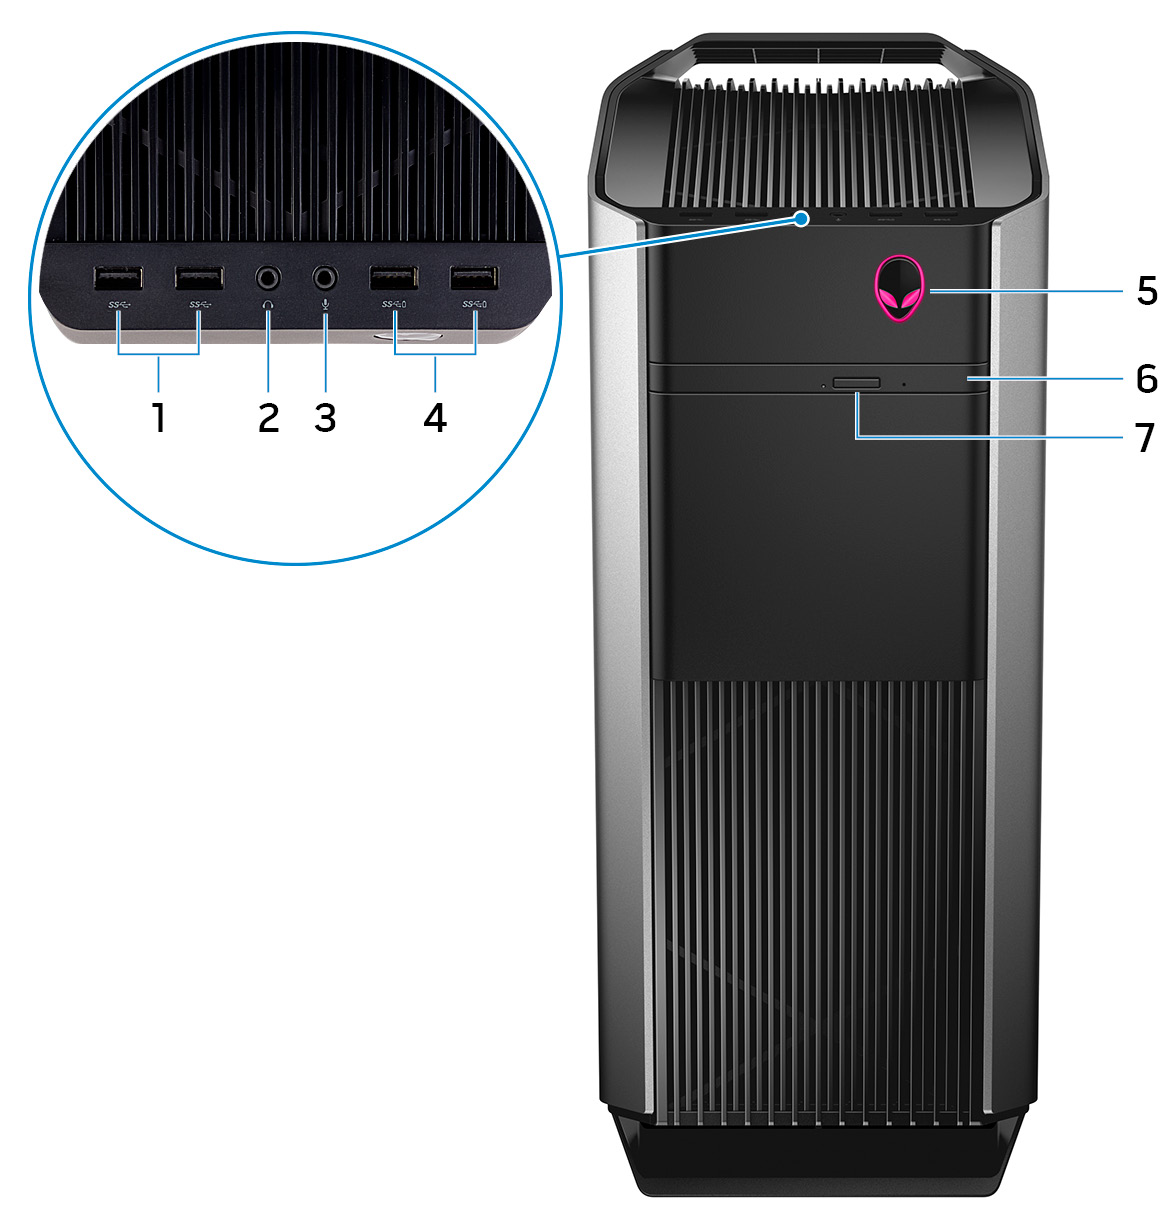 Vistas Parte frontal 1 Puertos USB 3.0 (2) Conecte periféricos como dispositivos de almacenamiento e impresoras.